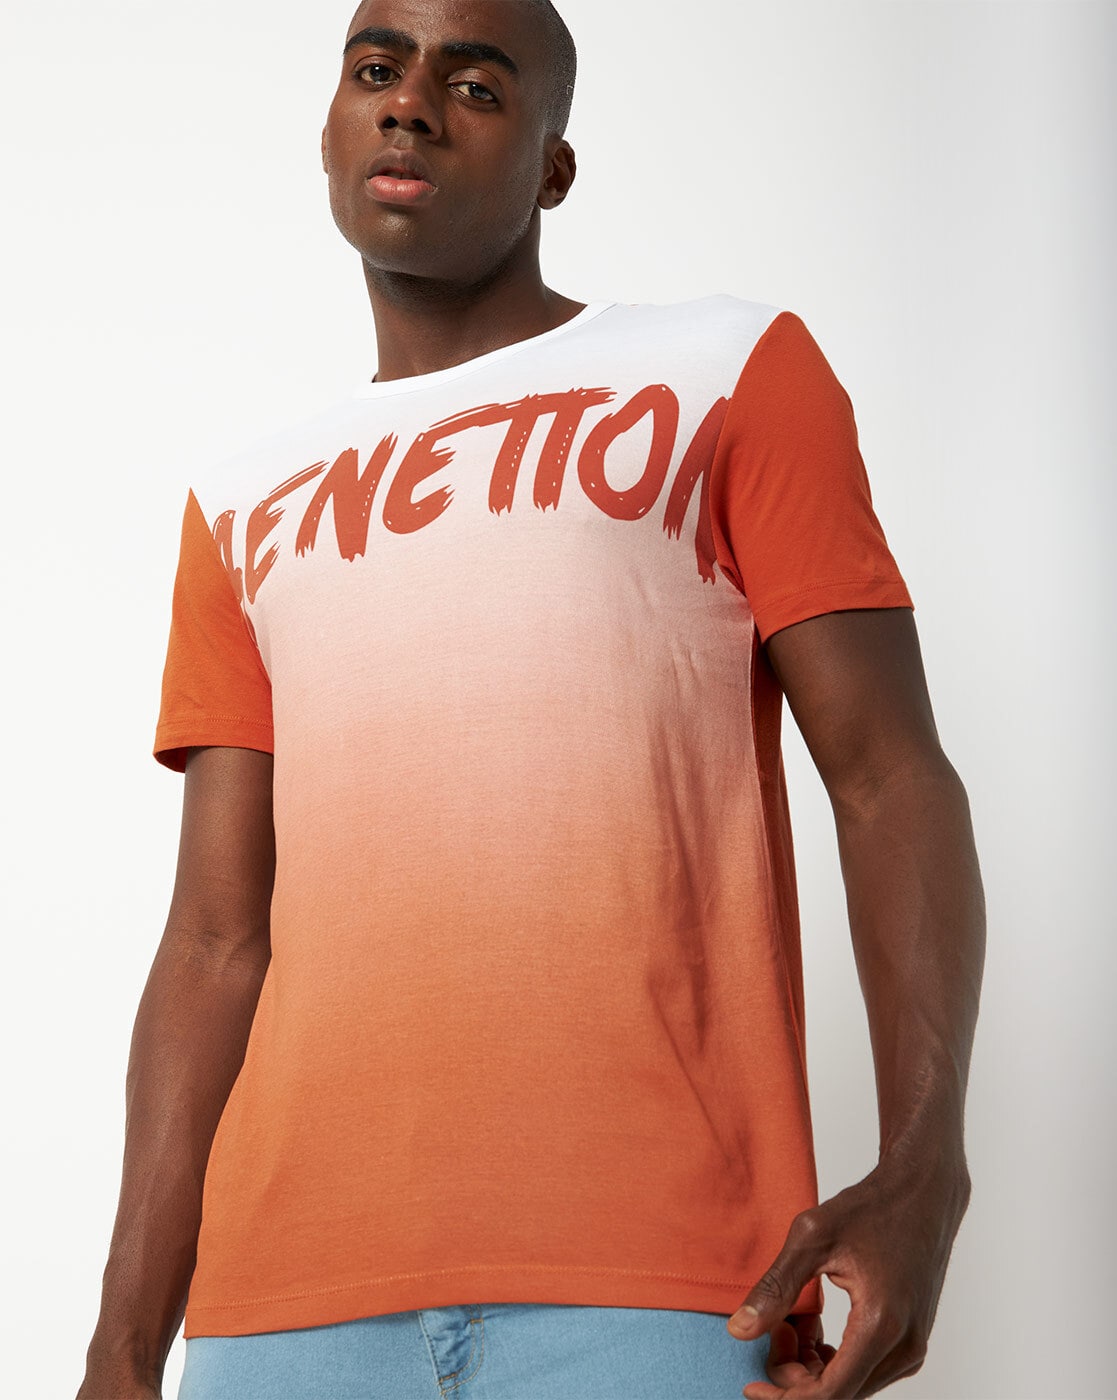 united in orange t shirts